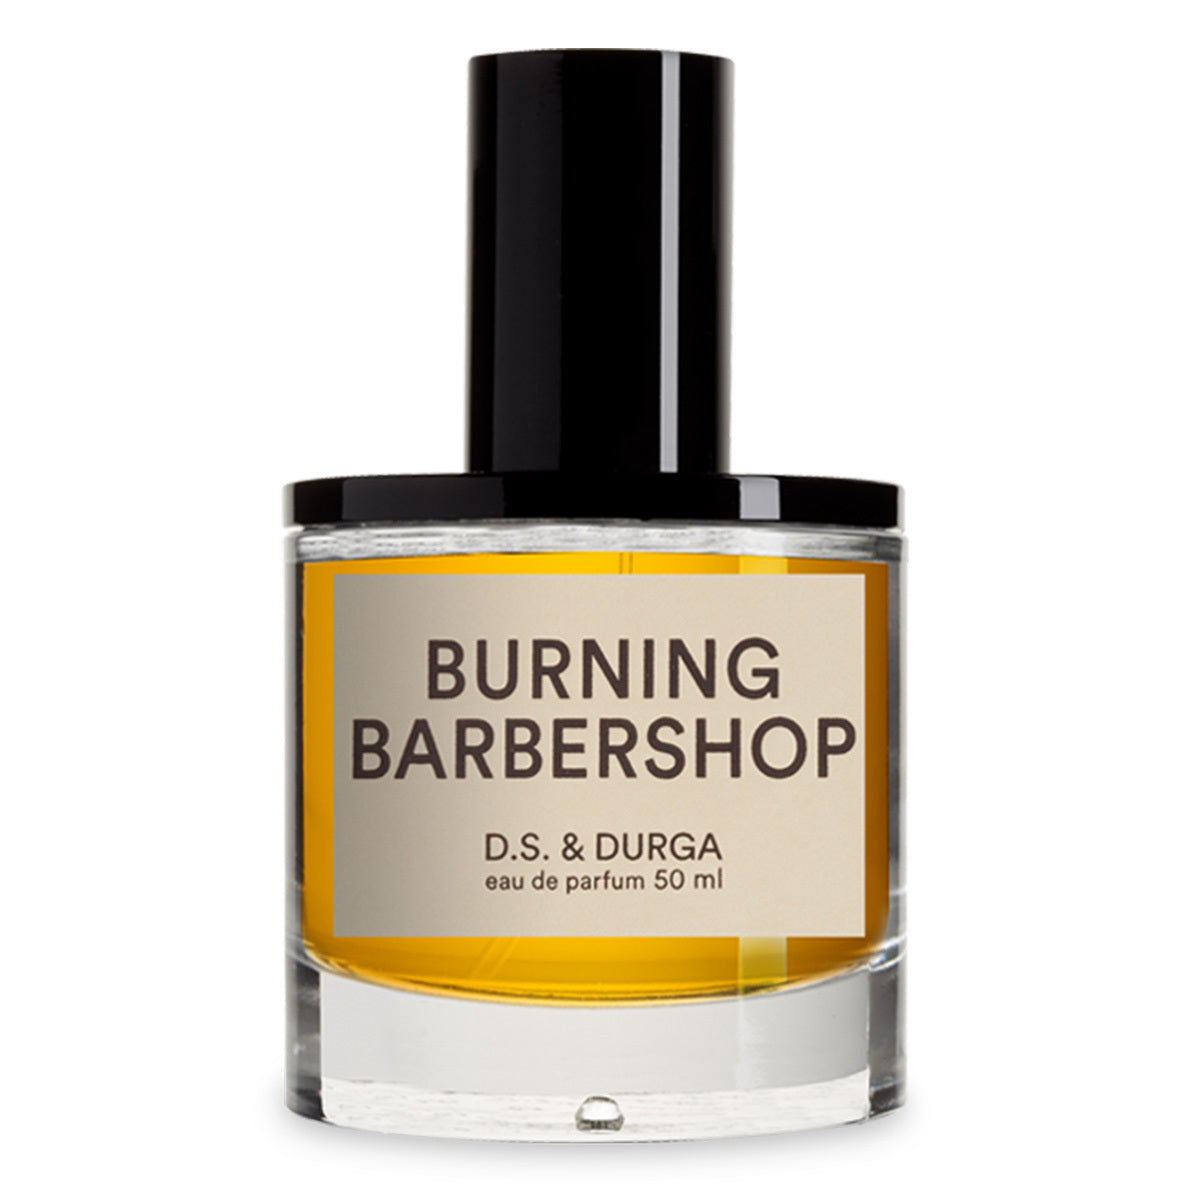 Primary image of Burning Barbershop Eau de Parfum